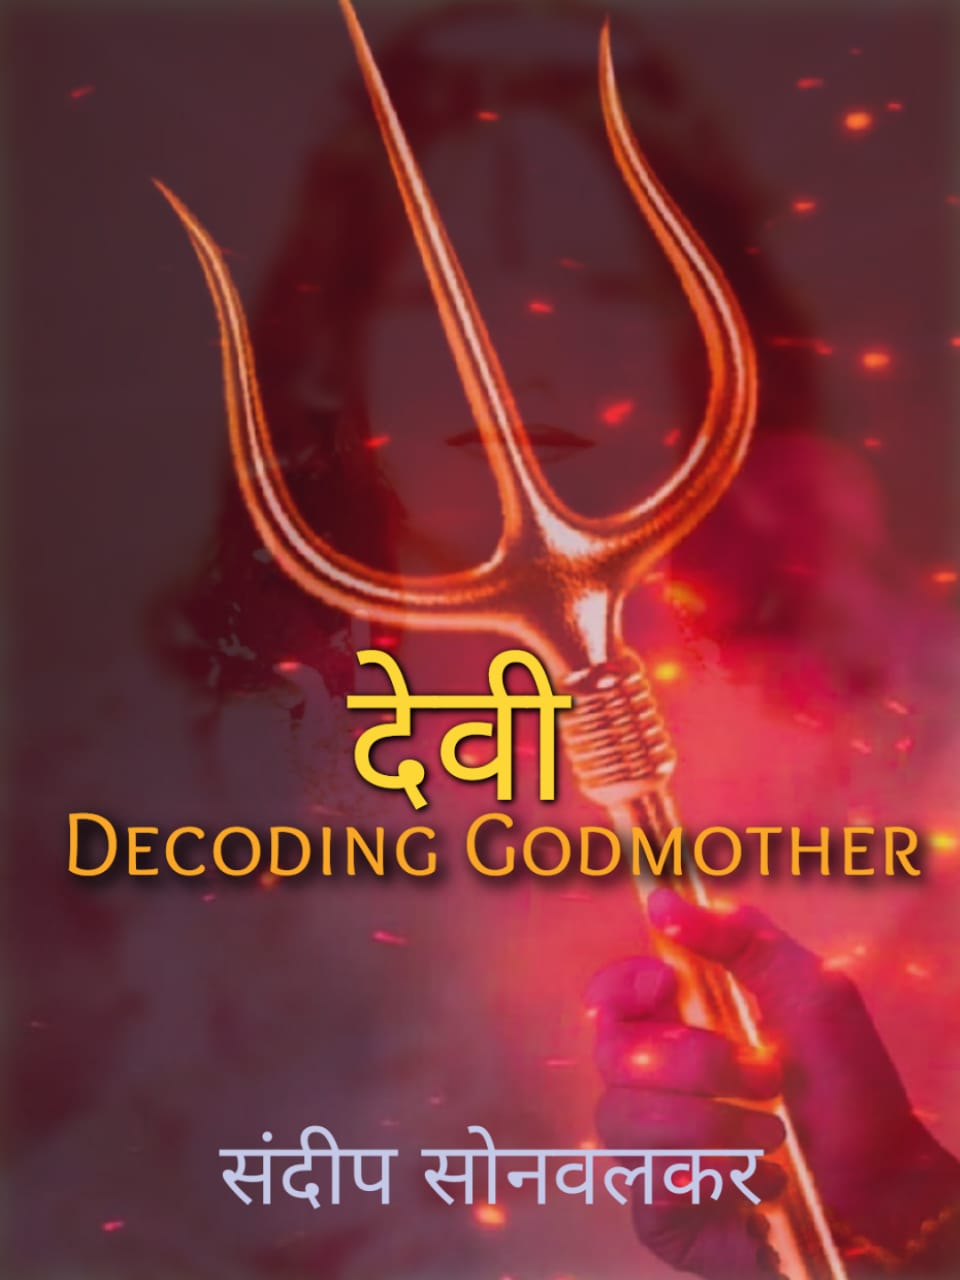 Devi Decoding Godmother